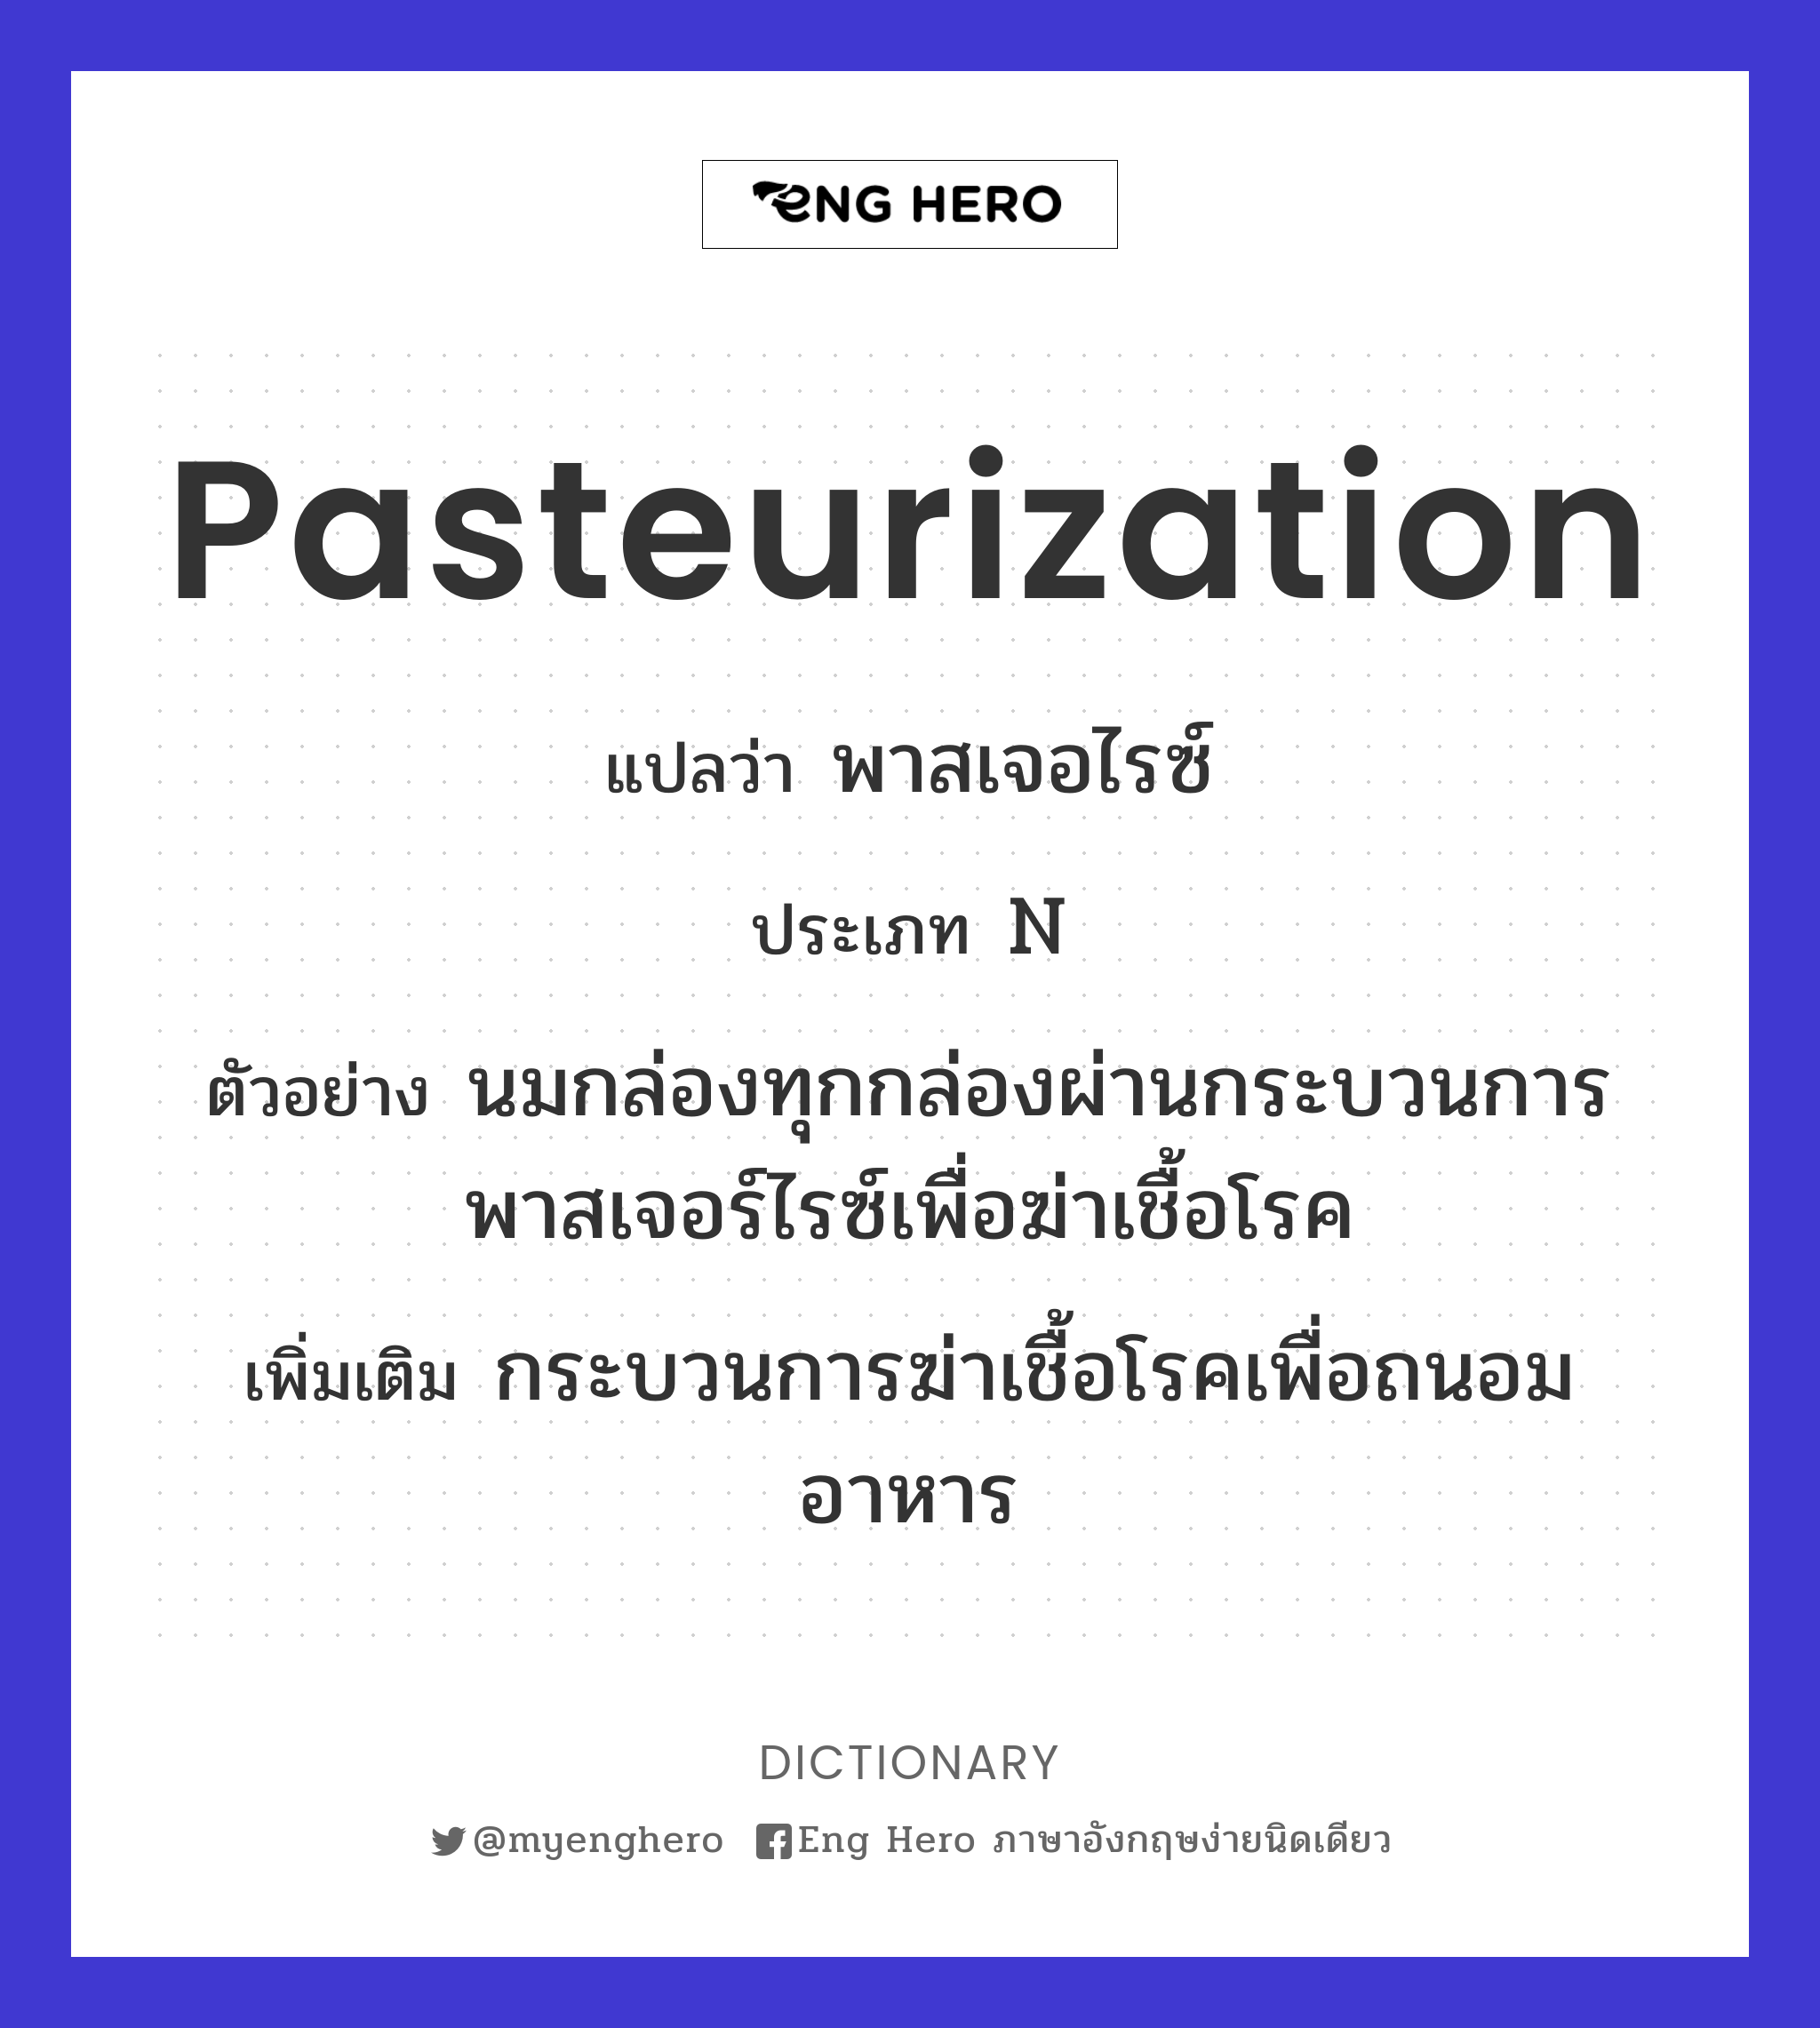 pasteurization